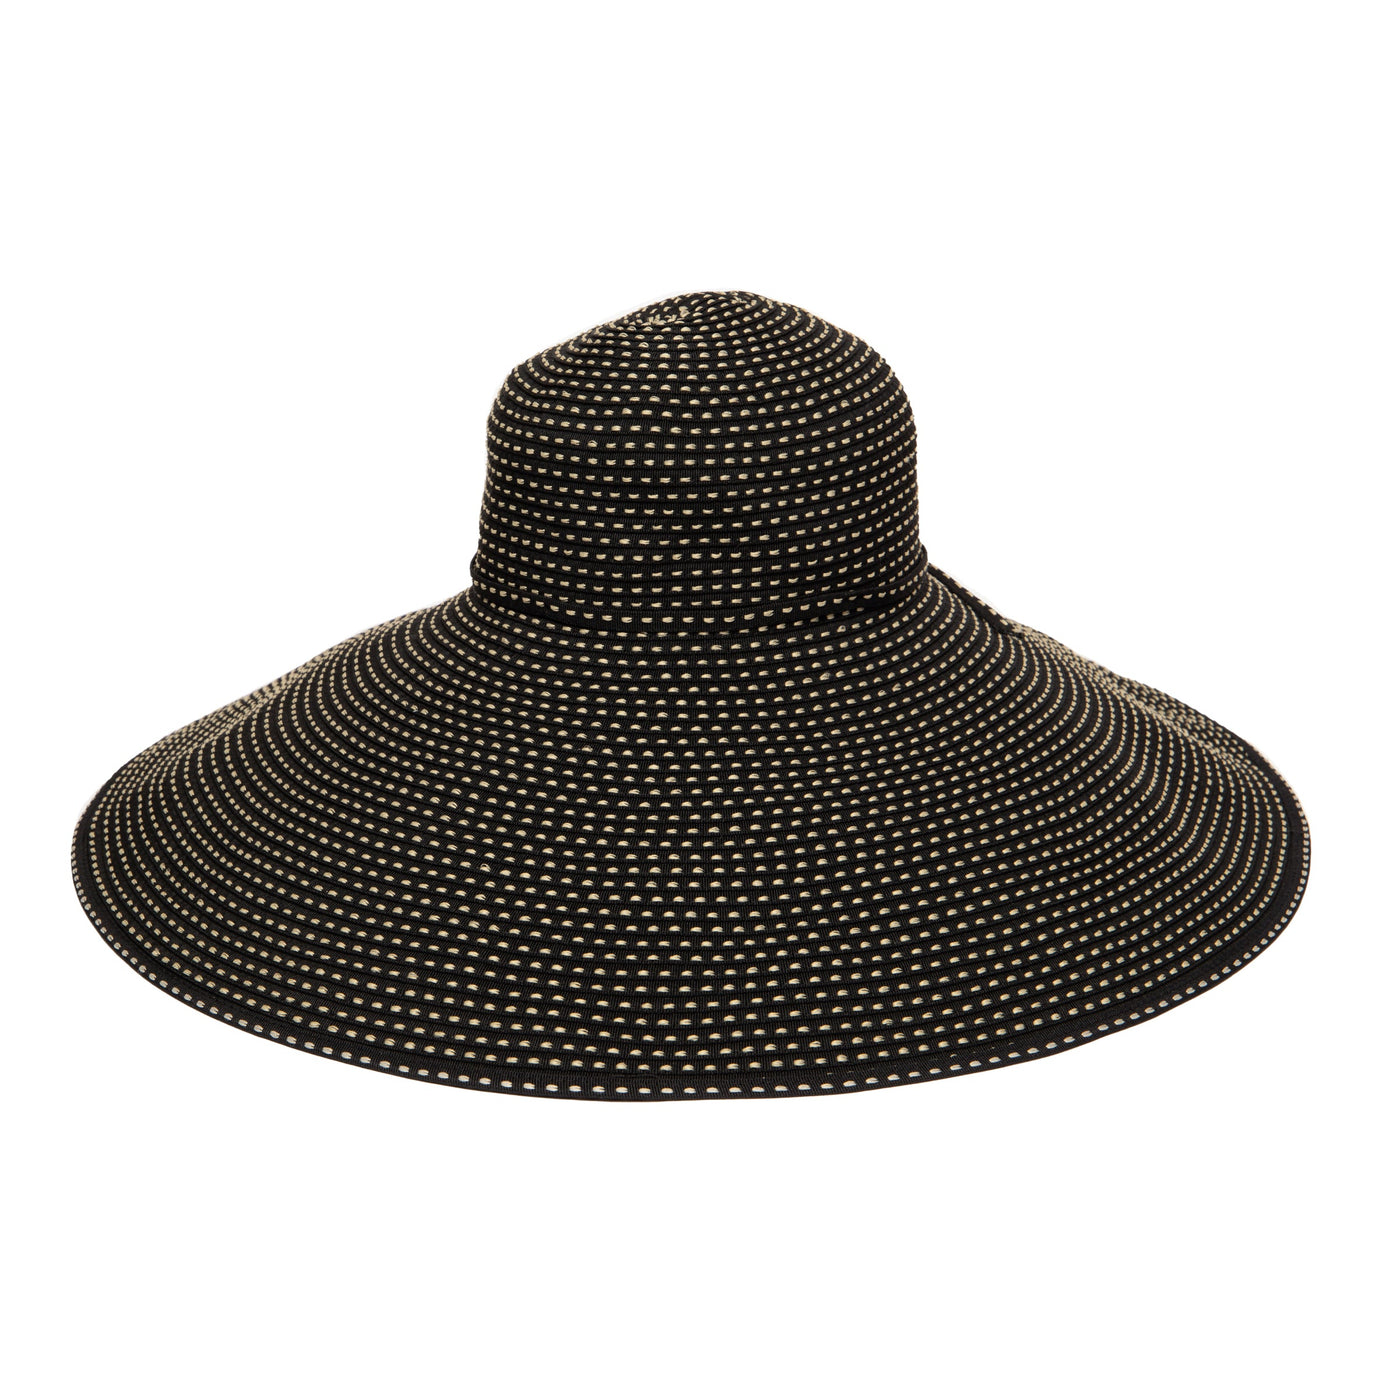 SUN BRIM - Women's Wide Brim Ribbon Floppy Hat With Ticking Fabric